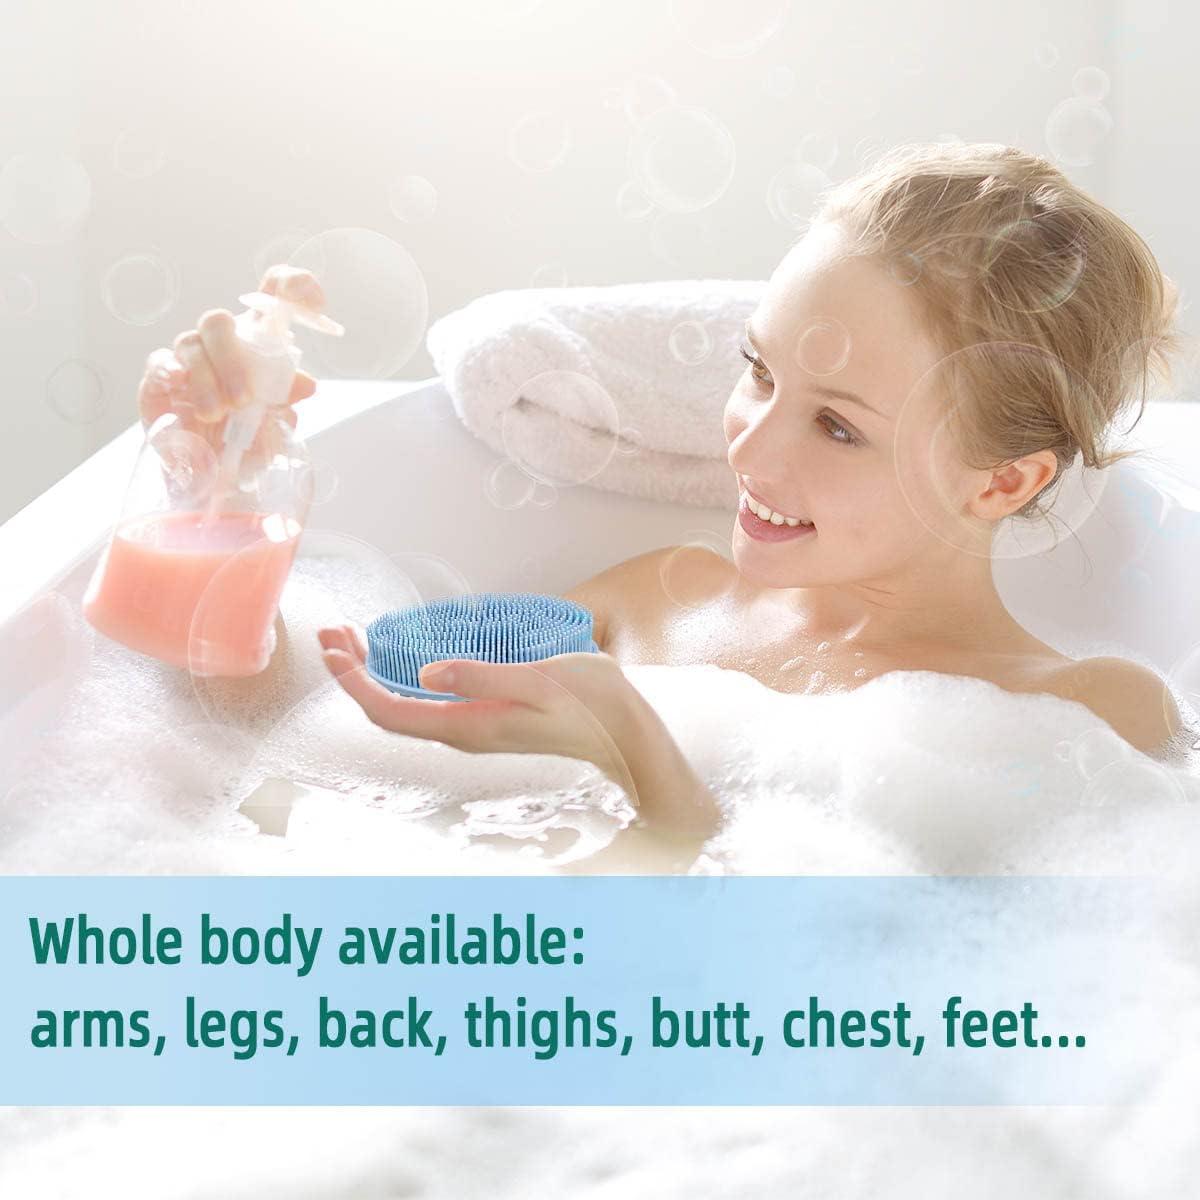 Bath Brush Double Side Silicone Massage Brush Back Shower Cleaning Remove  Exfoliating Bathroom Wash For Bathing